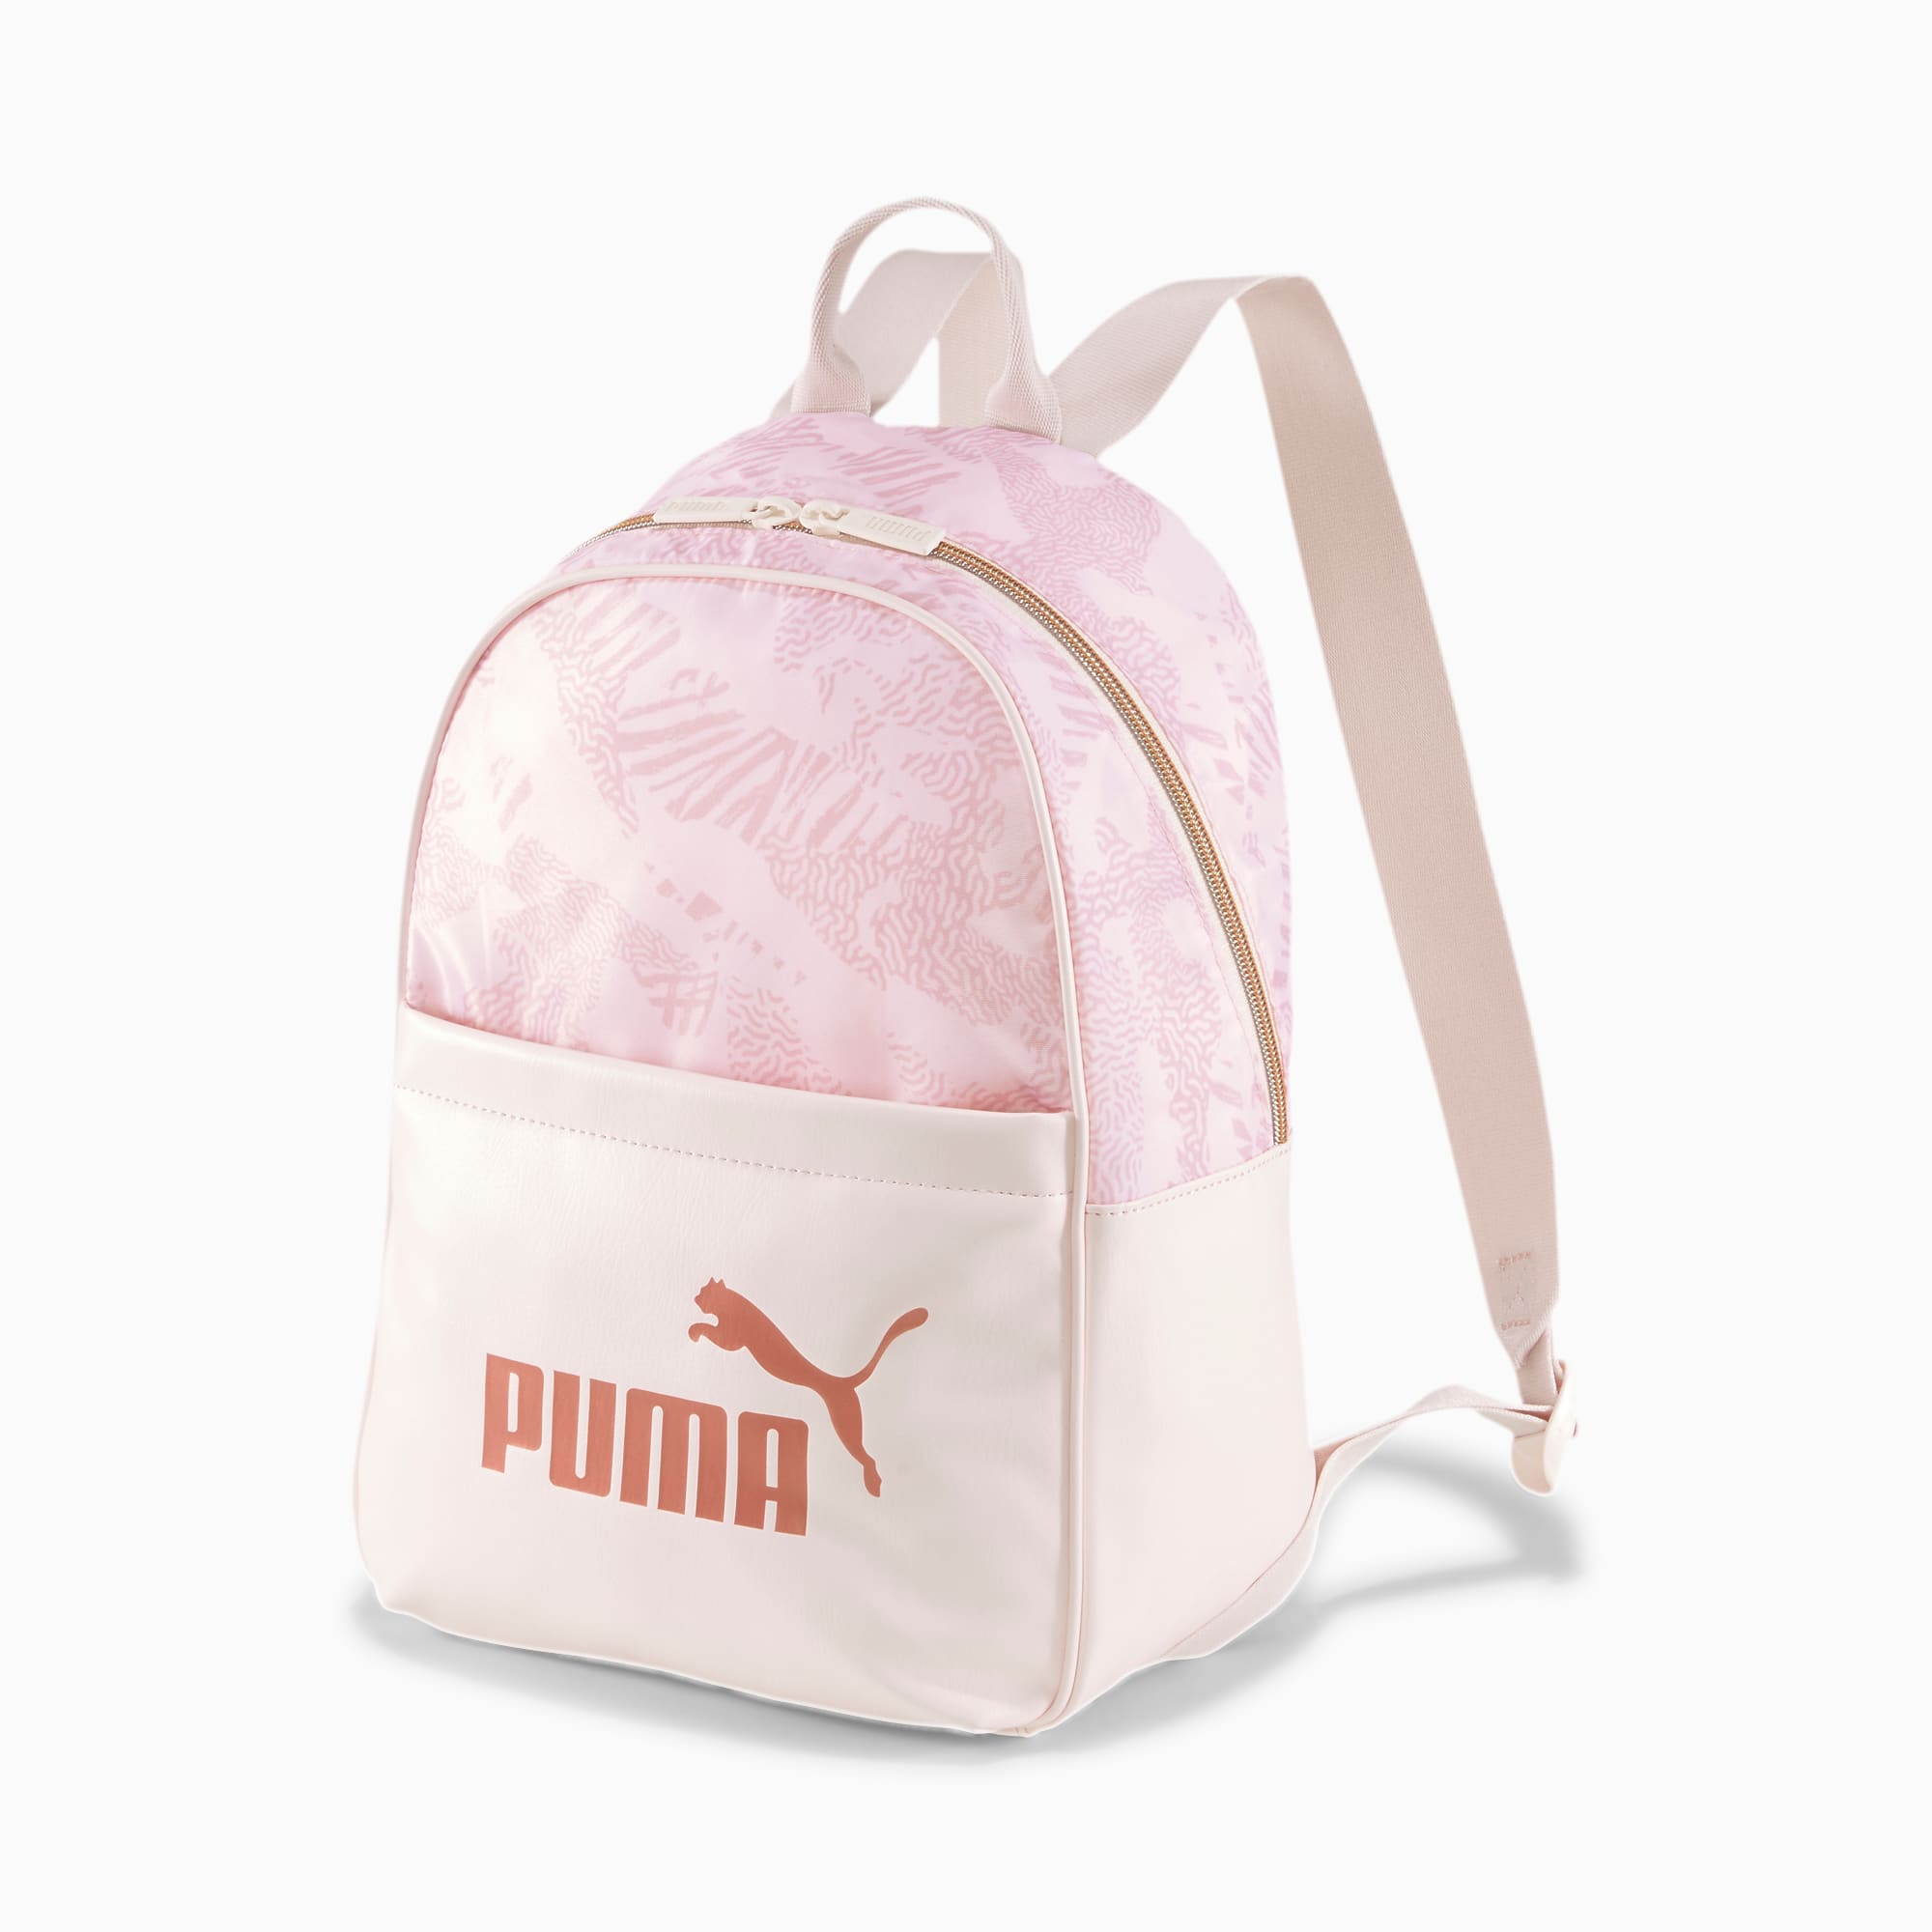 puma backpack women's